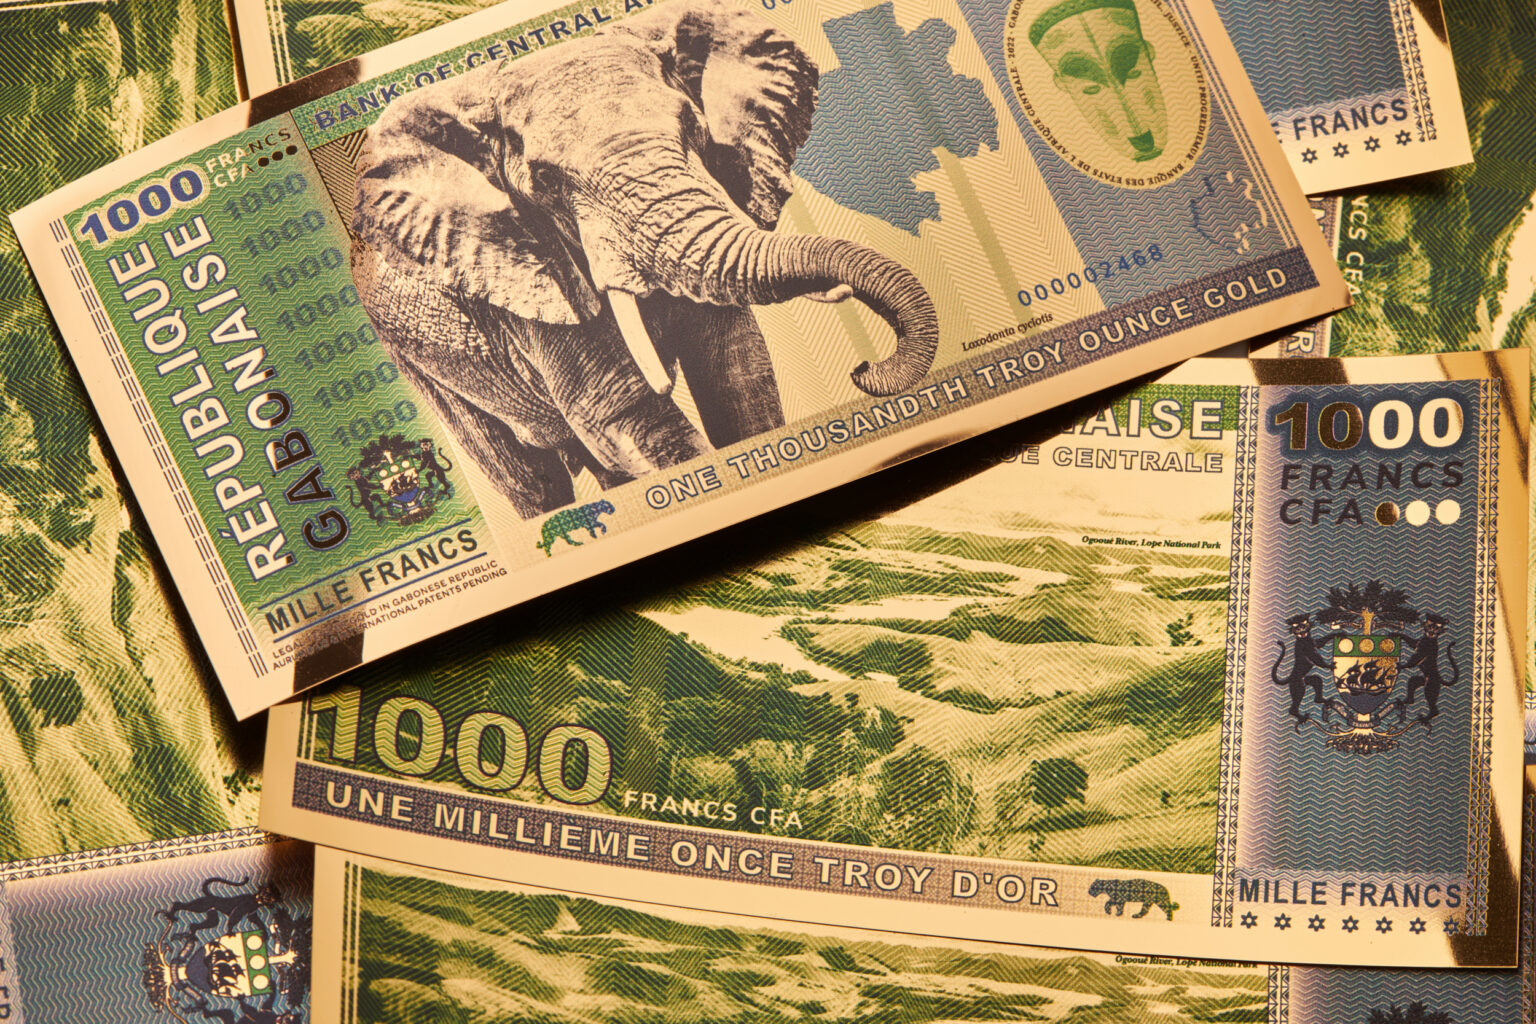 Both sides of the Gabon 1000 Franc Aurum® Gold Bill.